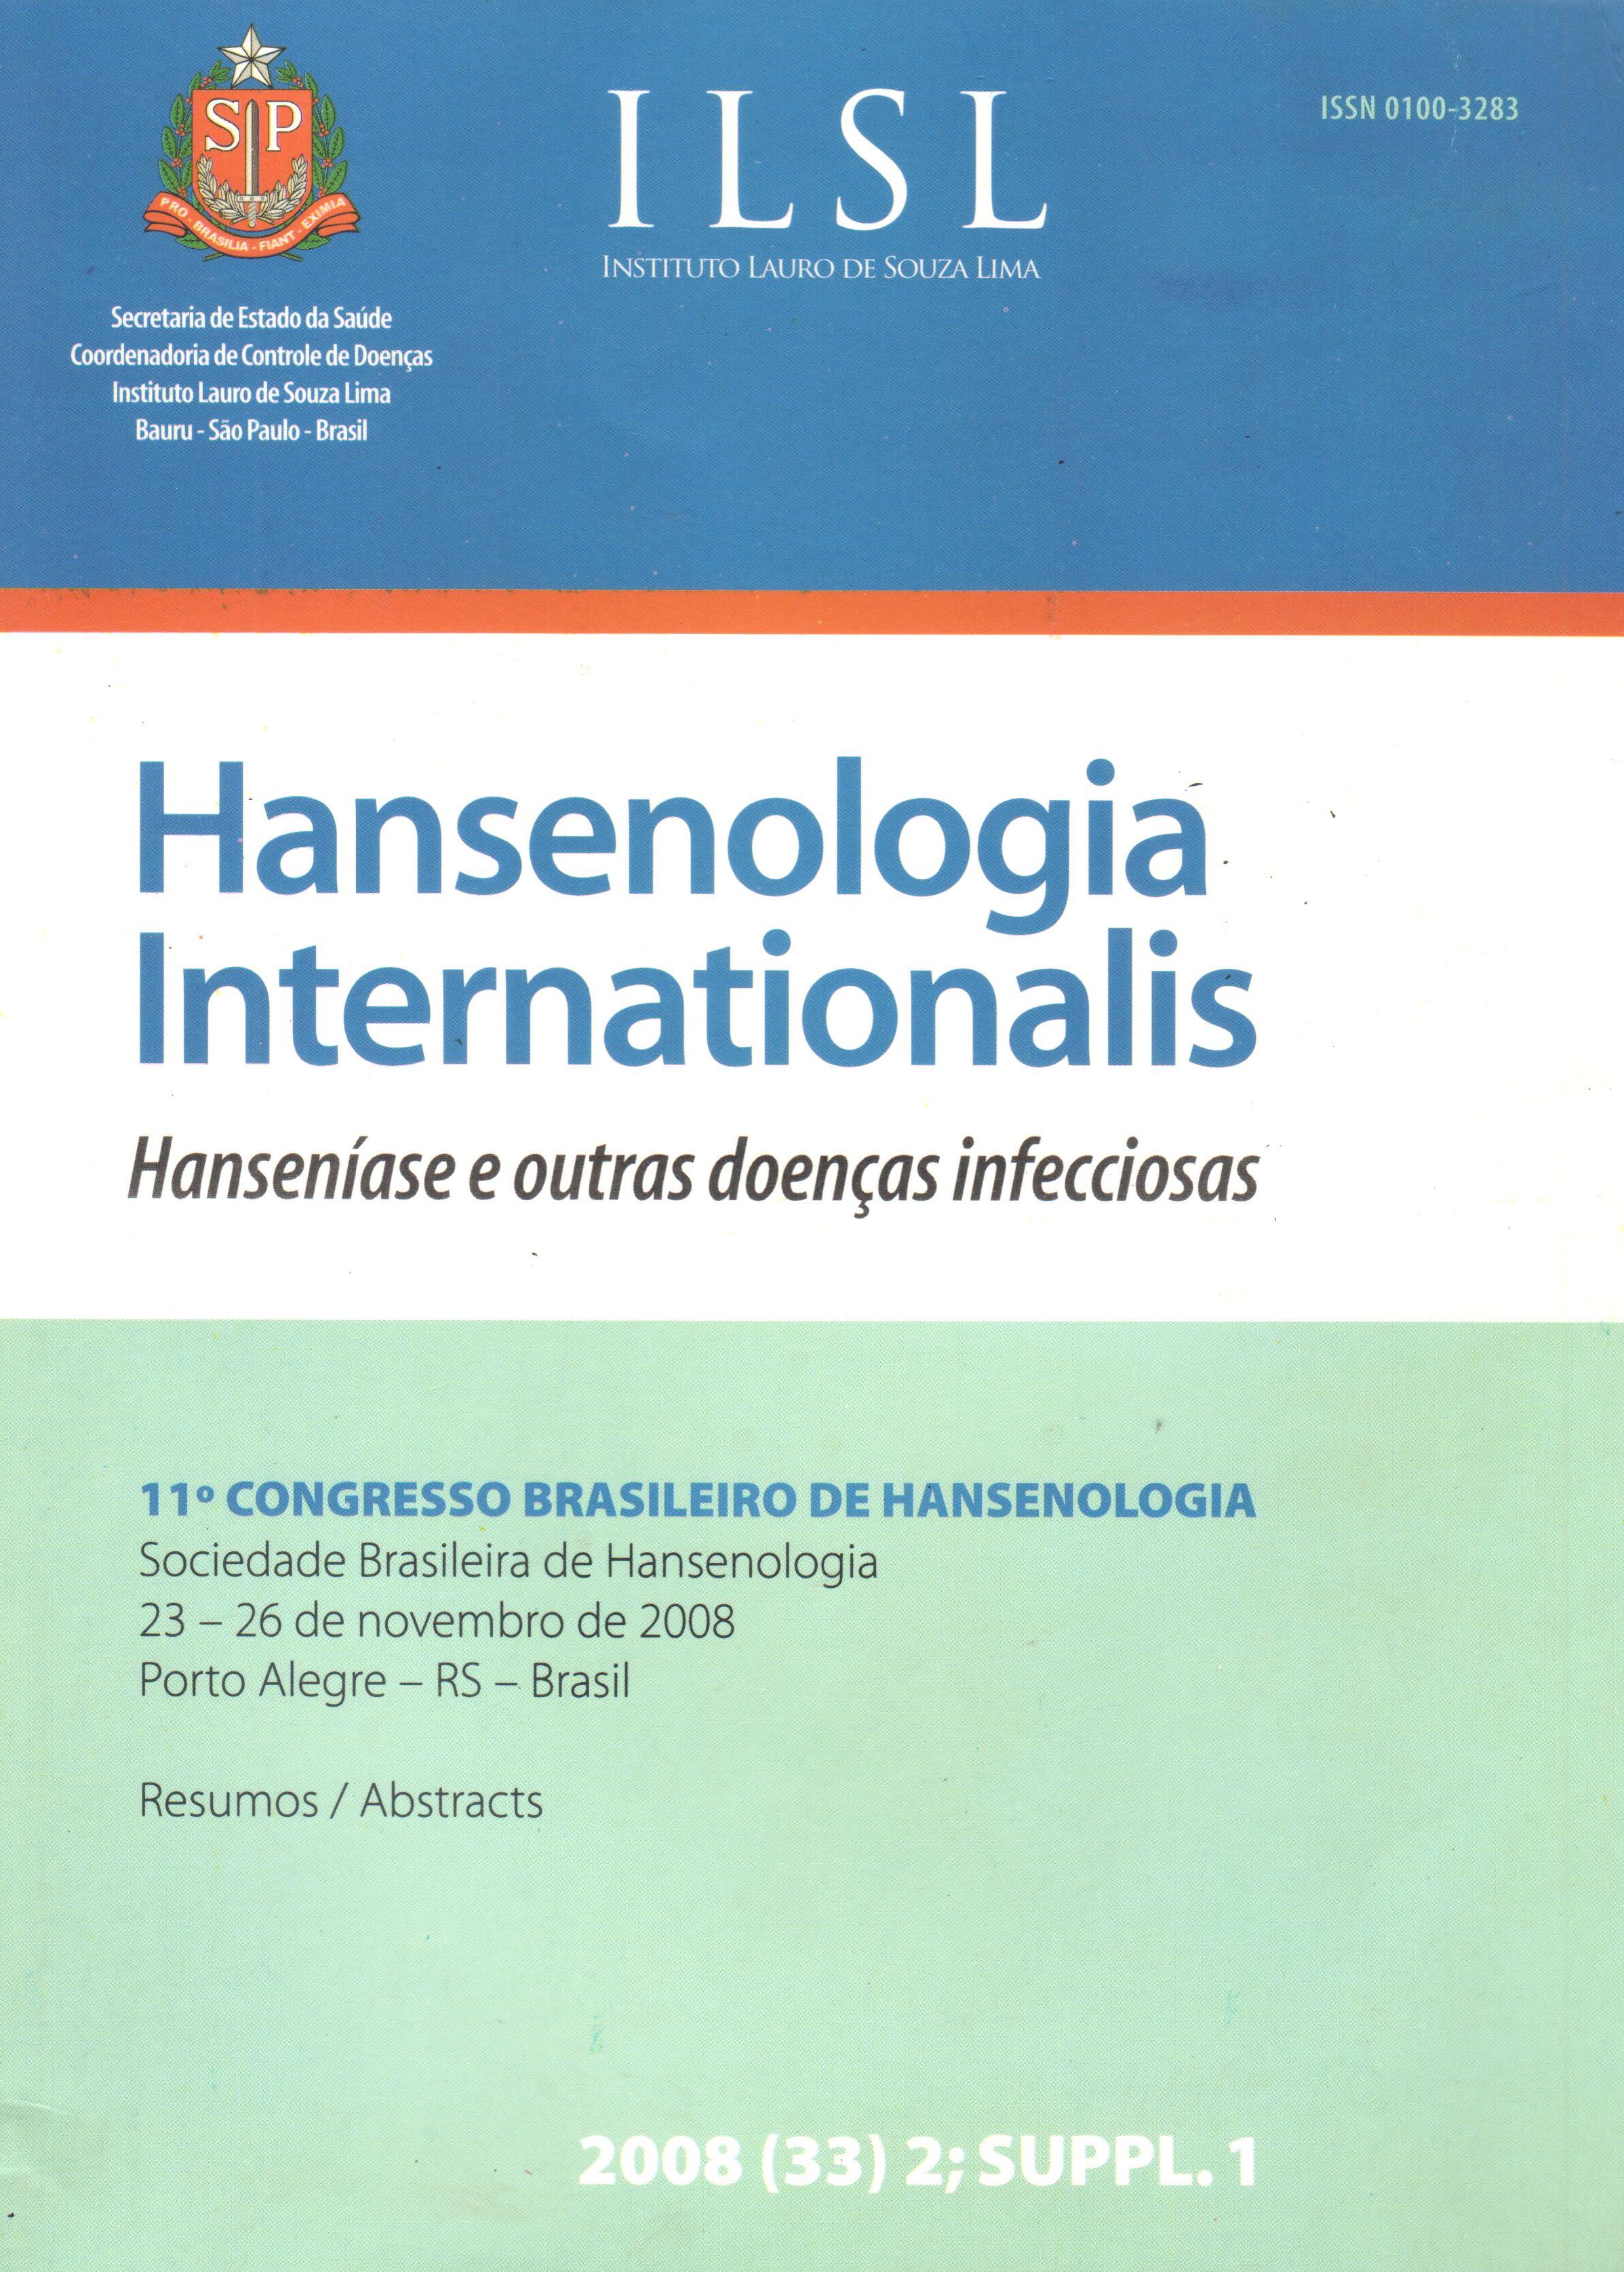 					Visualizar v. 33 n. Suppl. (2008): 11º Congresso Brasileiro de Hansenologia - Sociedade Brasileira de Hansenologia - 23 a 26 de novembro de 2008 - Porto Alegre - RS - Brasil
				